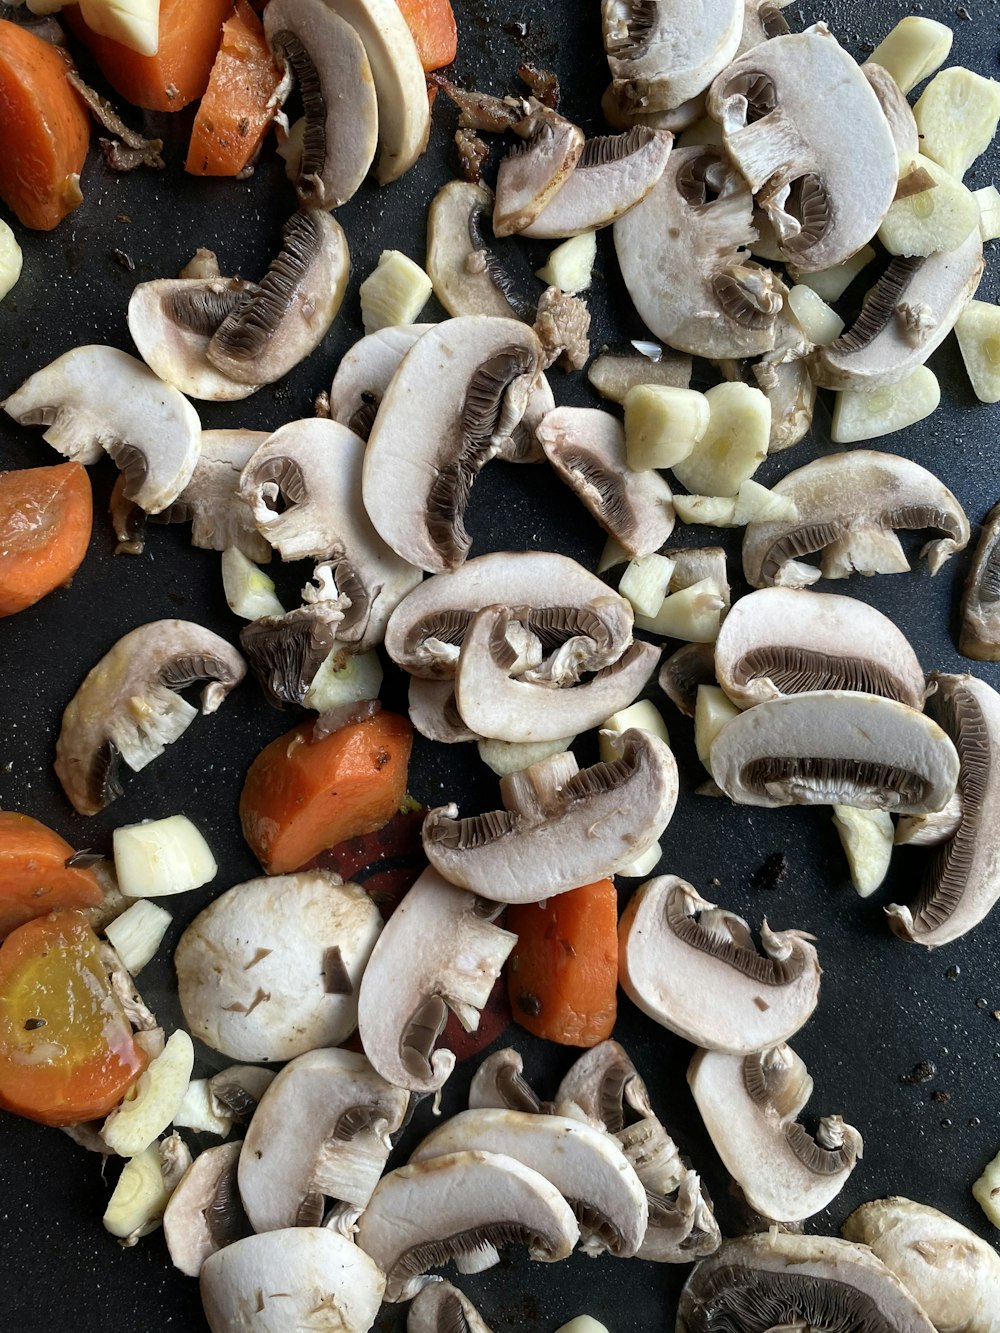 white and orange mushrooms on black textile